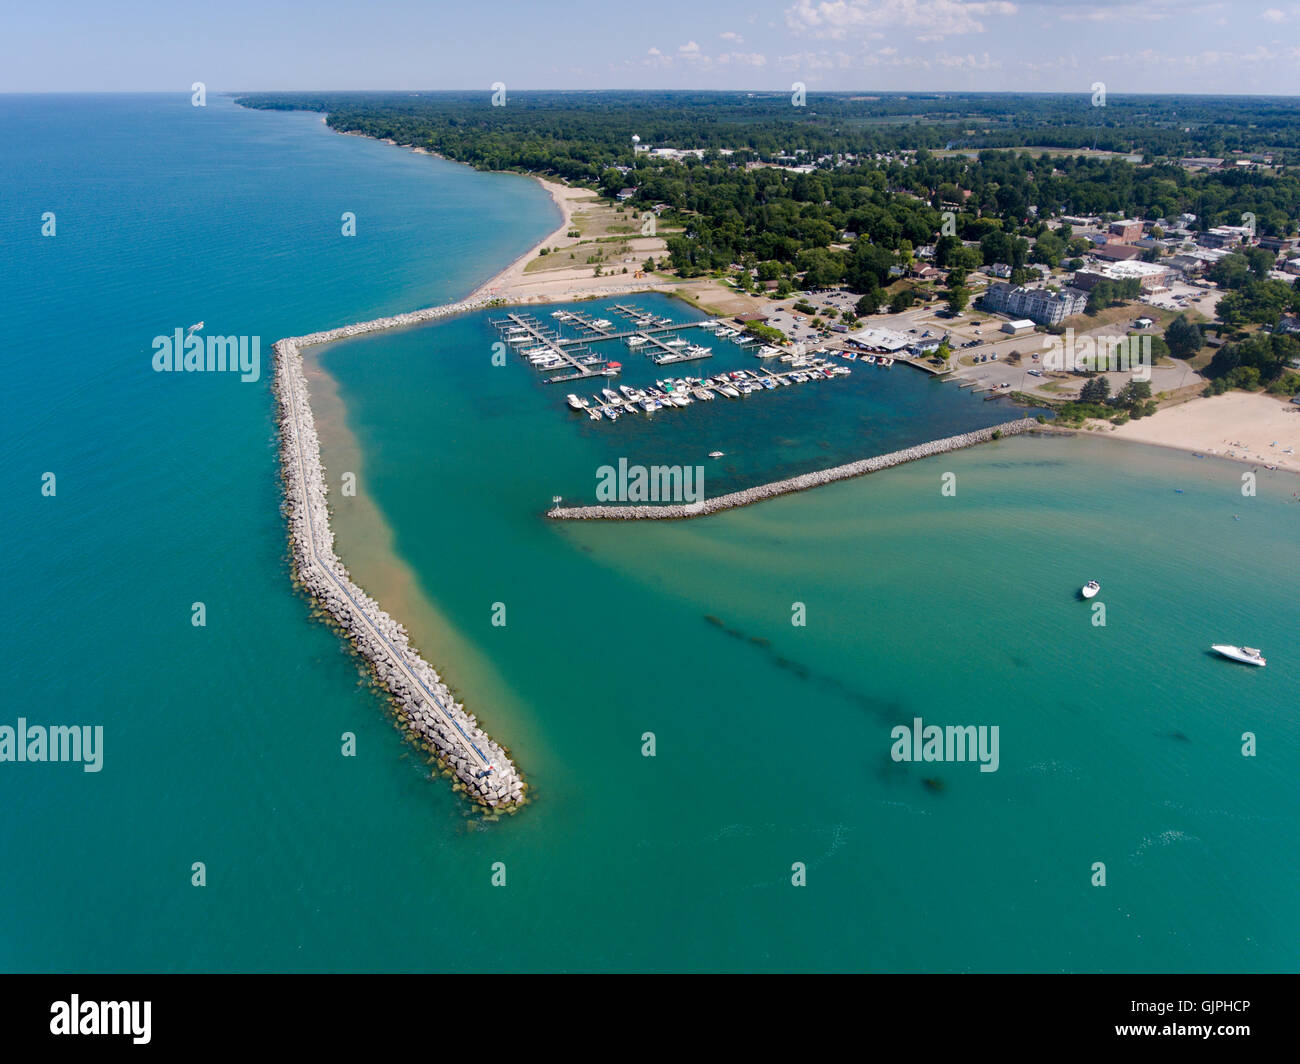 Aerial view of Small town man made harbor on Lake Huron at Lexington Michigan on Lake Huron Stock Photo